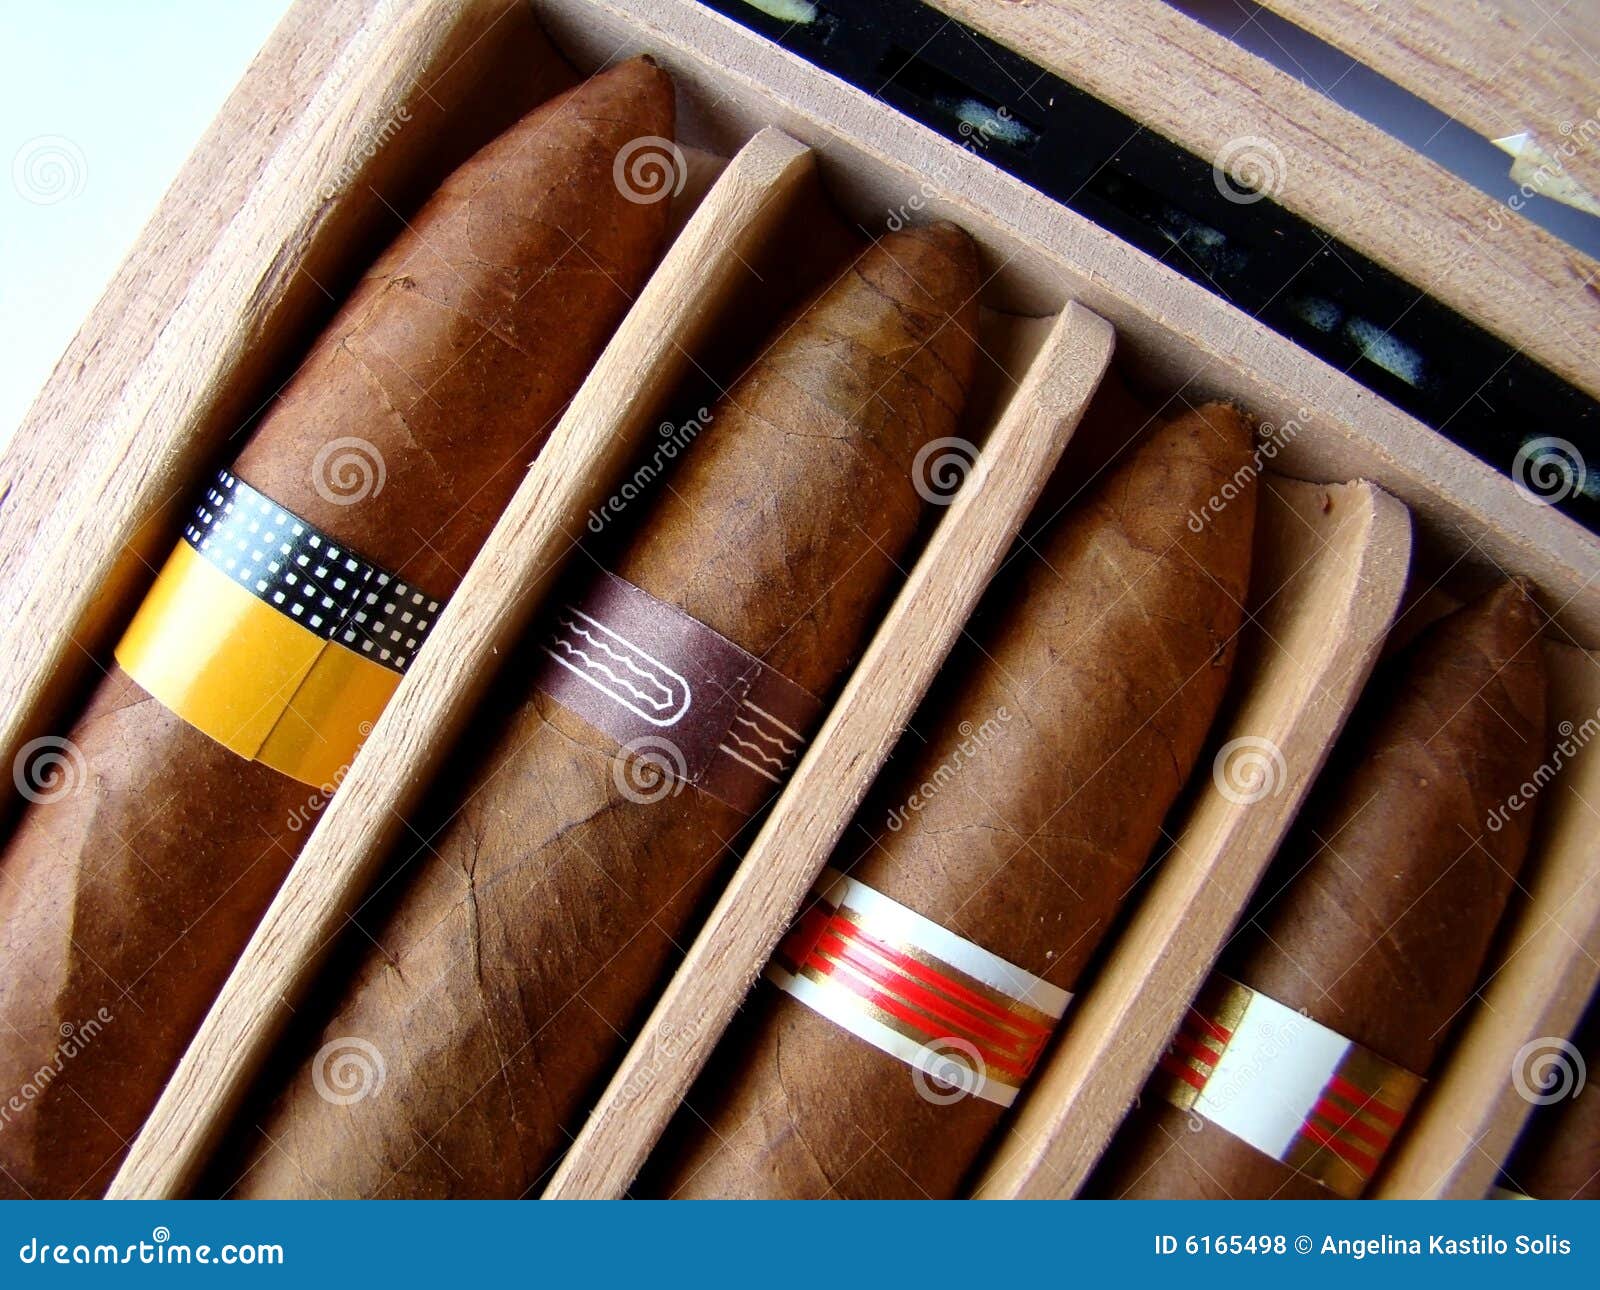 cuban brown cigars